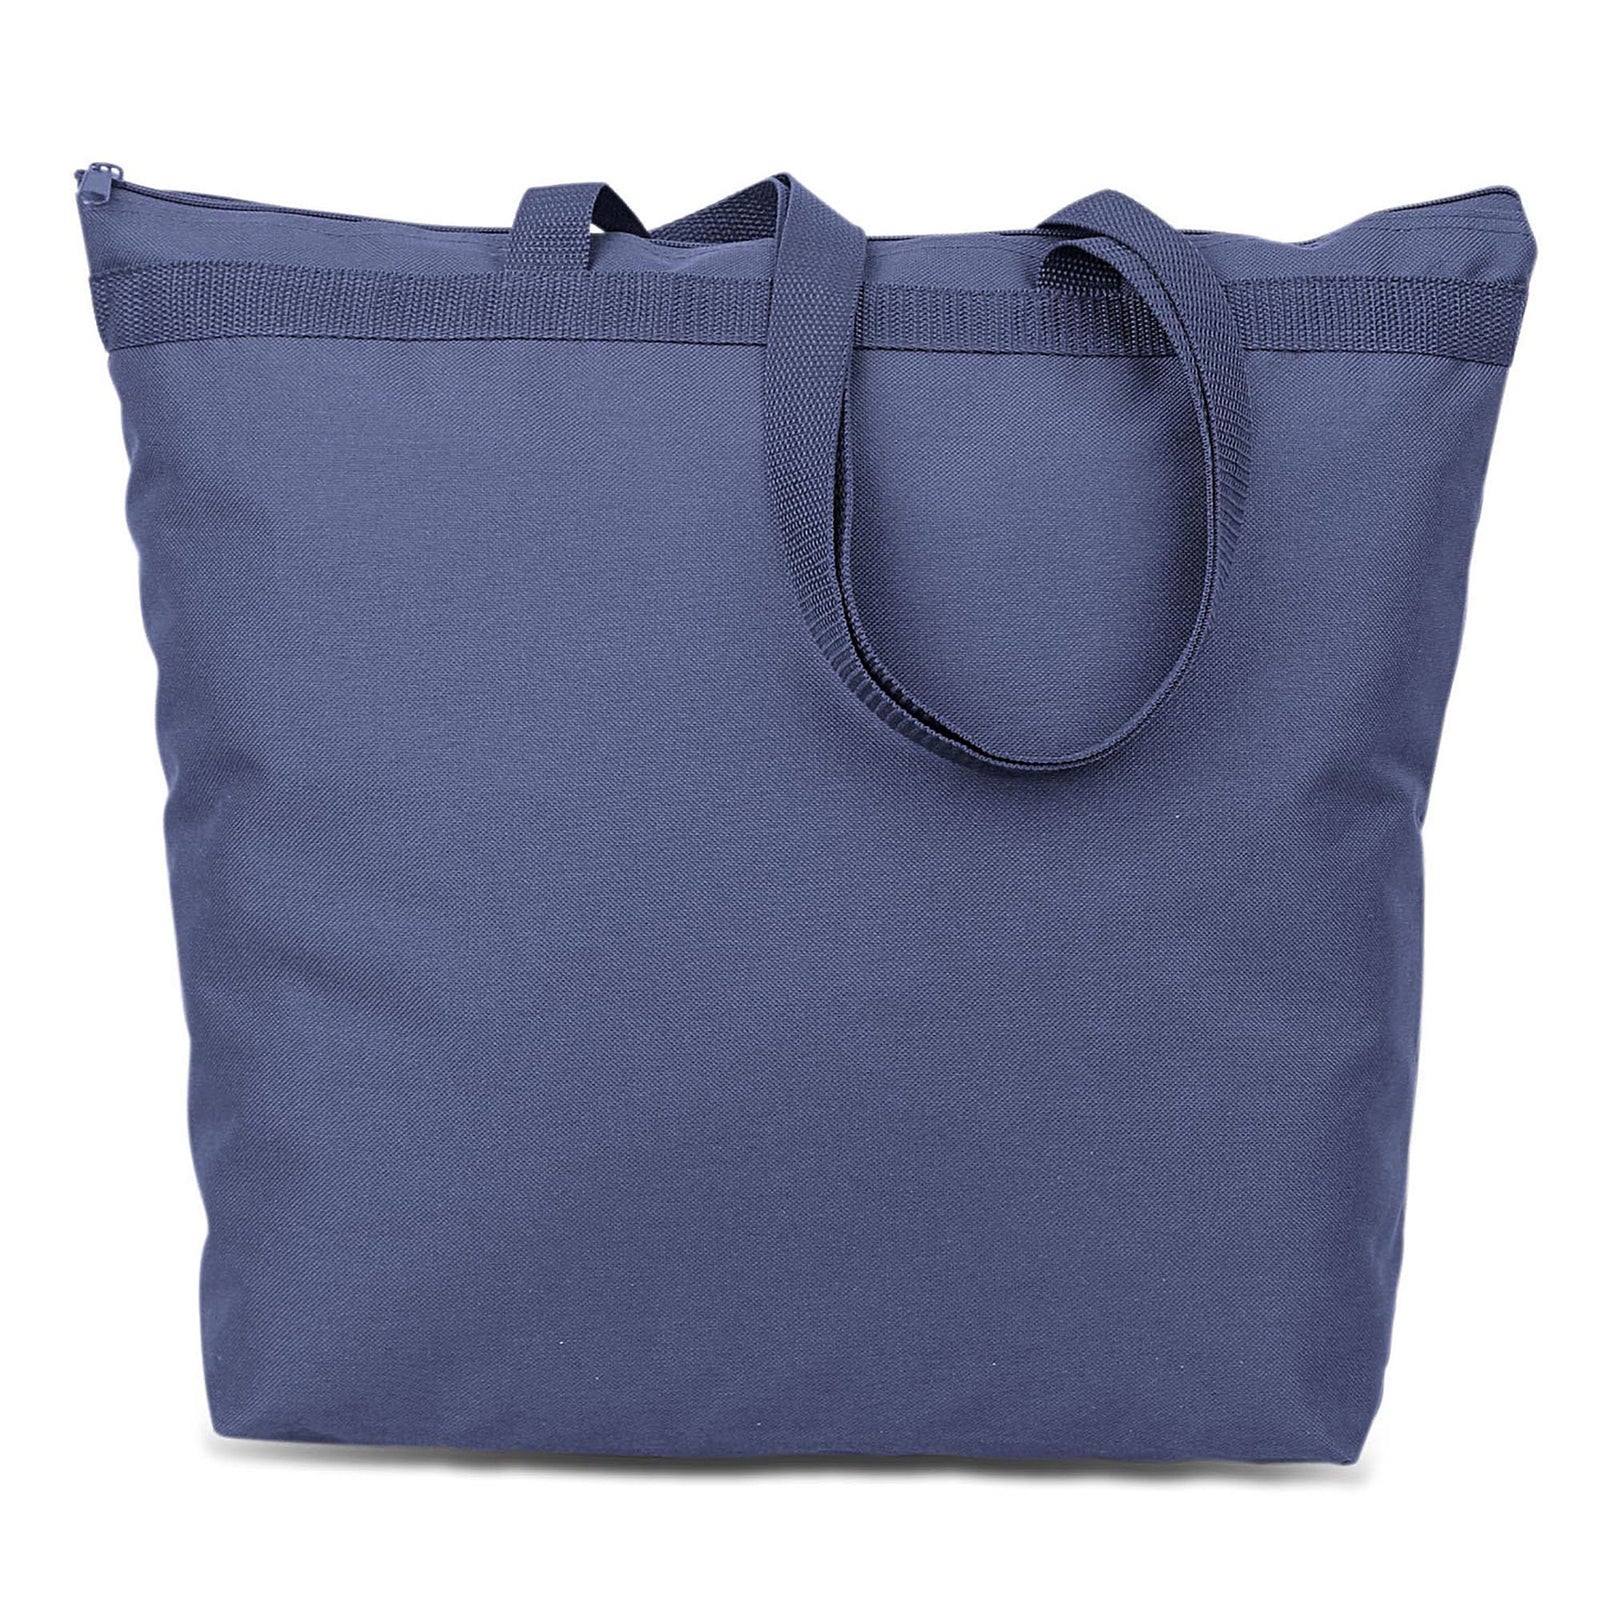 6 Packs Canvas Tote Bag Zipper, 16x15 Inch Bags Handle Reusable Washable Grocery Shopping Bags Plain Bags For Women Teacher Kids DIY Art Cra